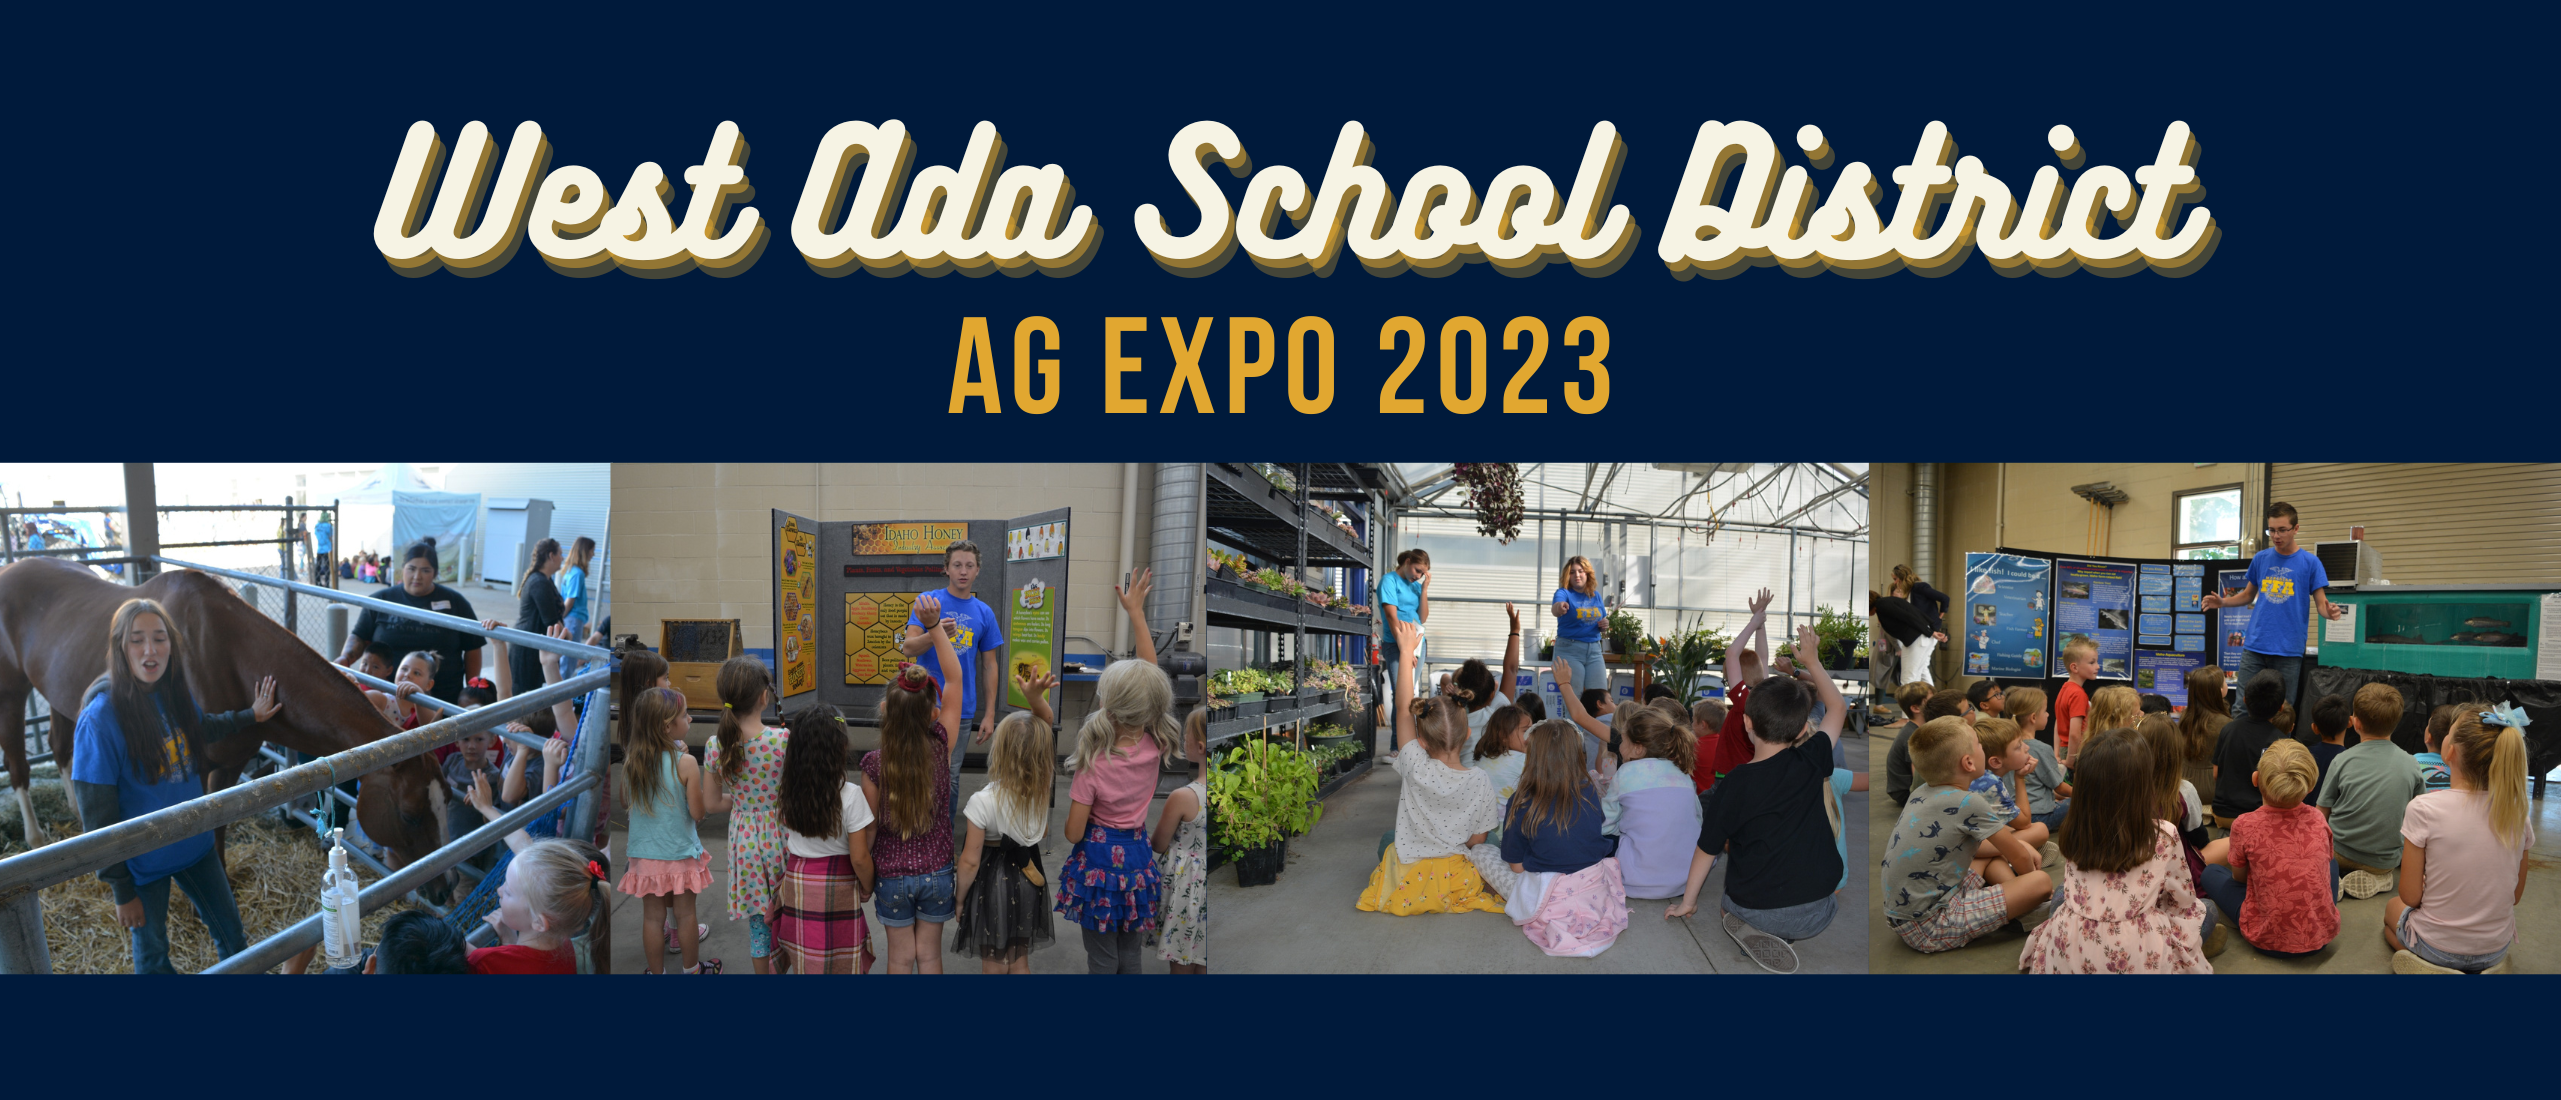 west ada school district ag expo 2023